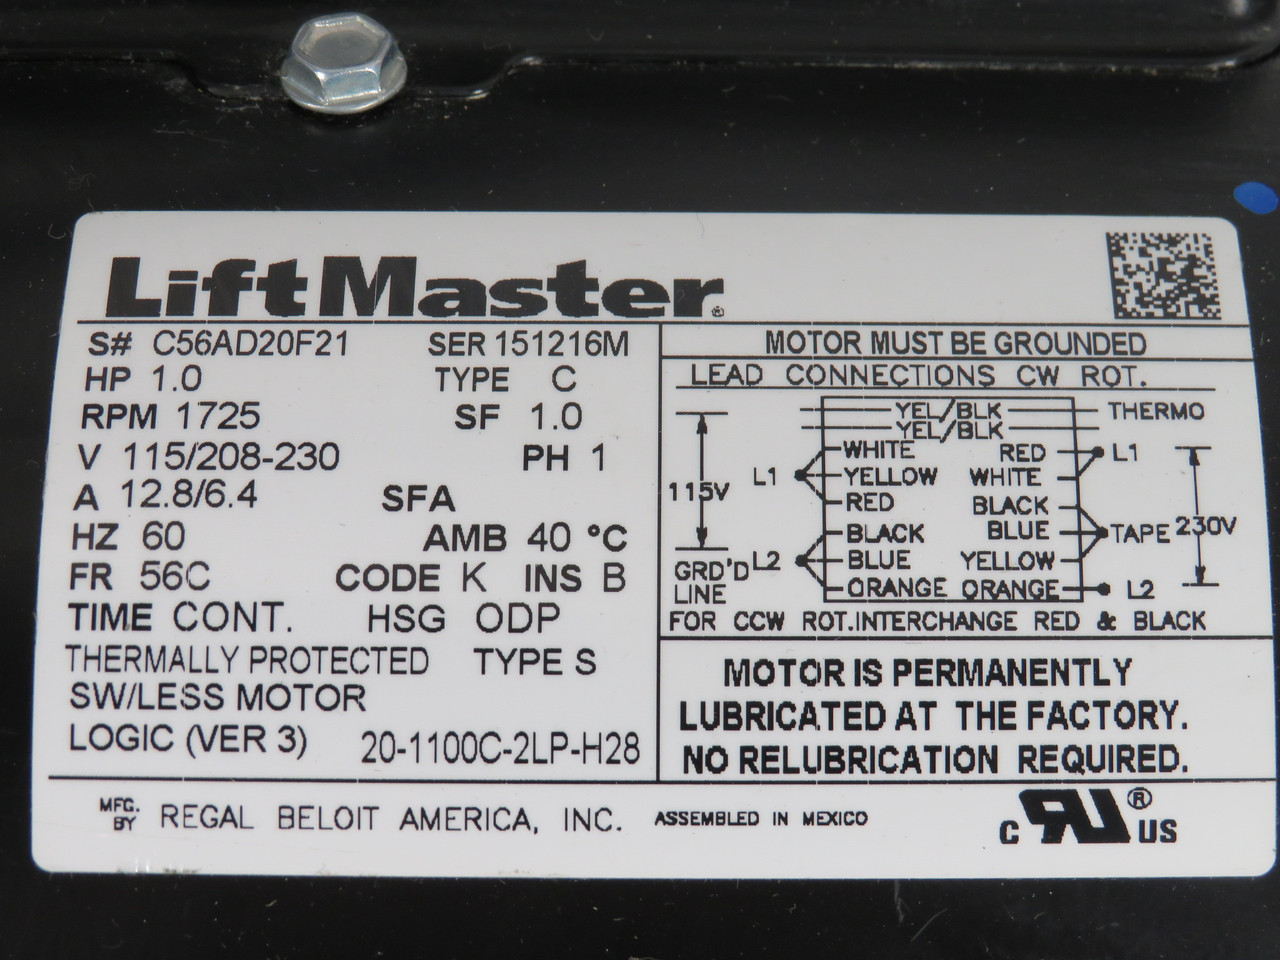 Regal Beloit LiftMaster 1.0HP 1725RPM 115/208-230V 56C 1Ph 12.8/6.4A 60Hz USED